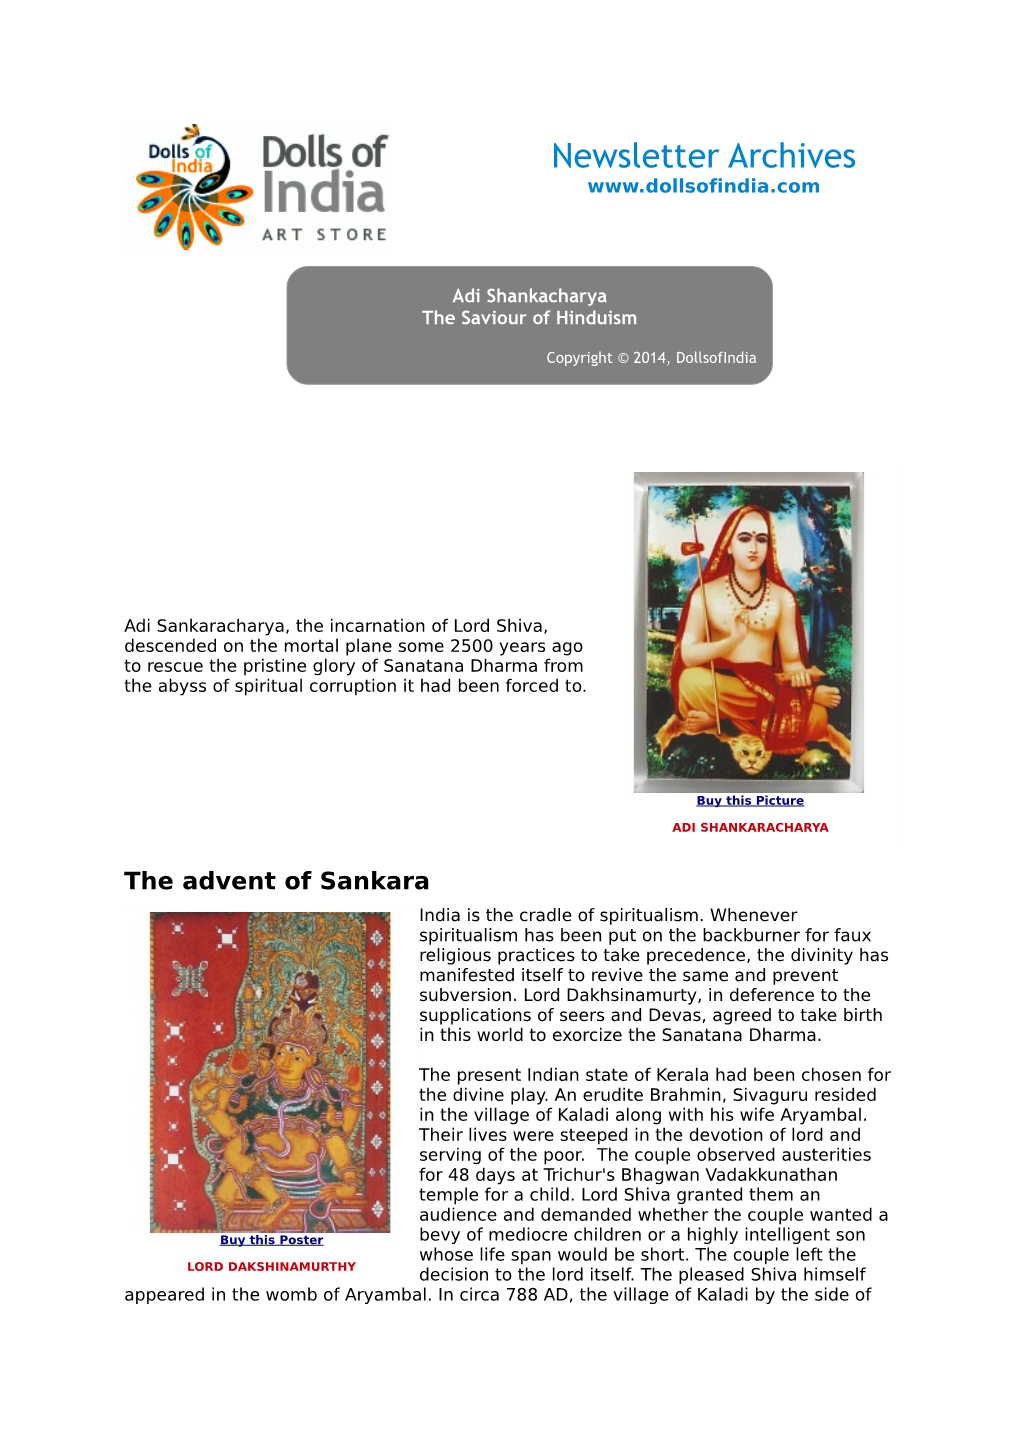 Puranas Known As Shankara Bhagavatpada, Who Makes the World Auspicious